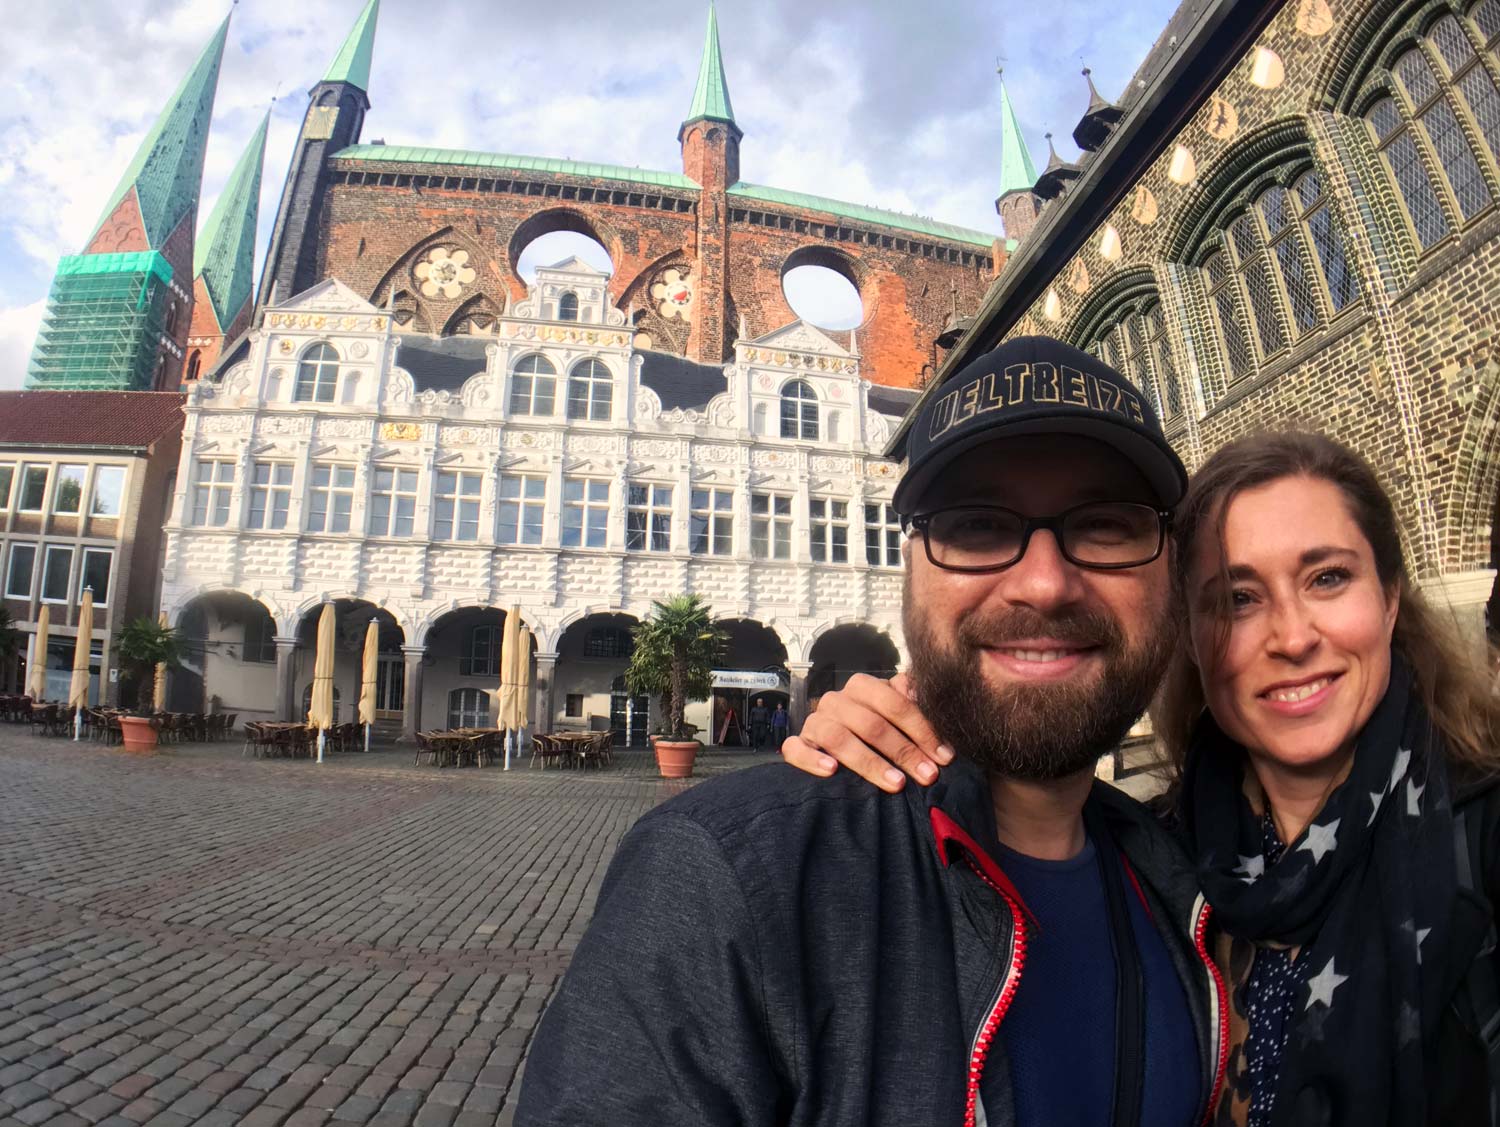 Reiseblogger Dominik und Claudia vor dem Rathaus in Lübeck